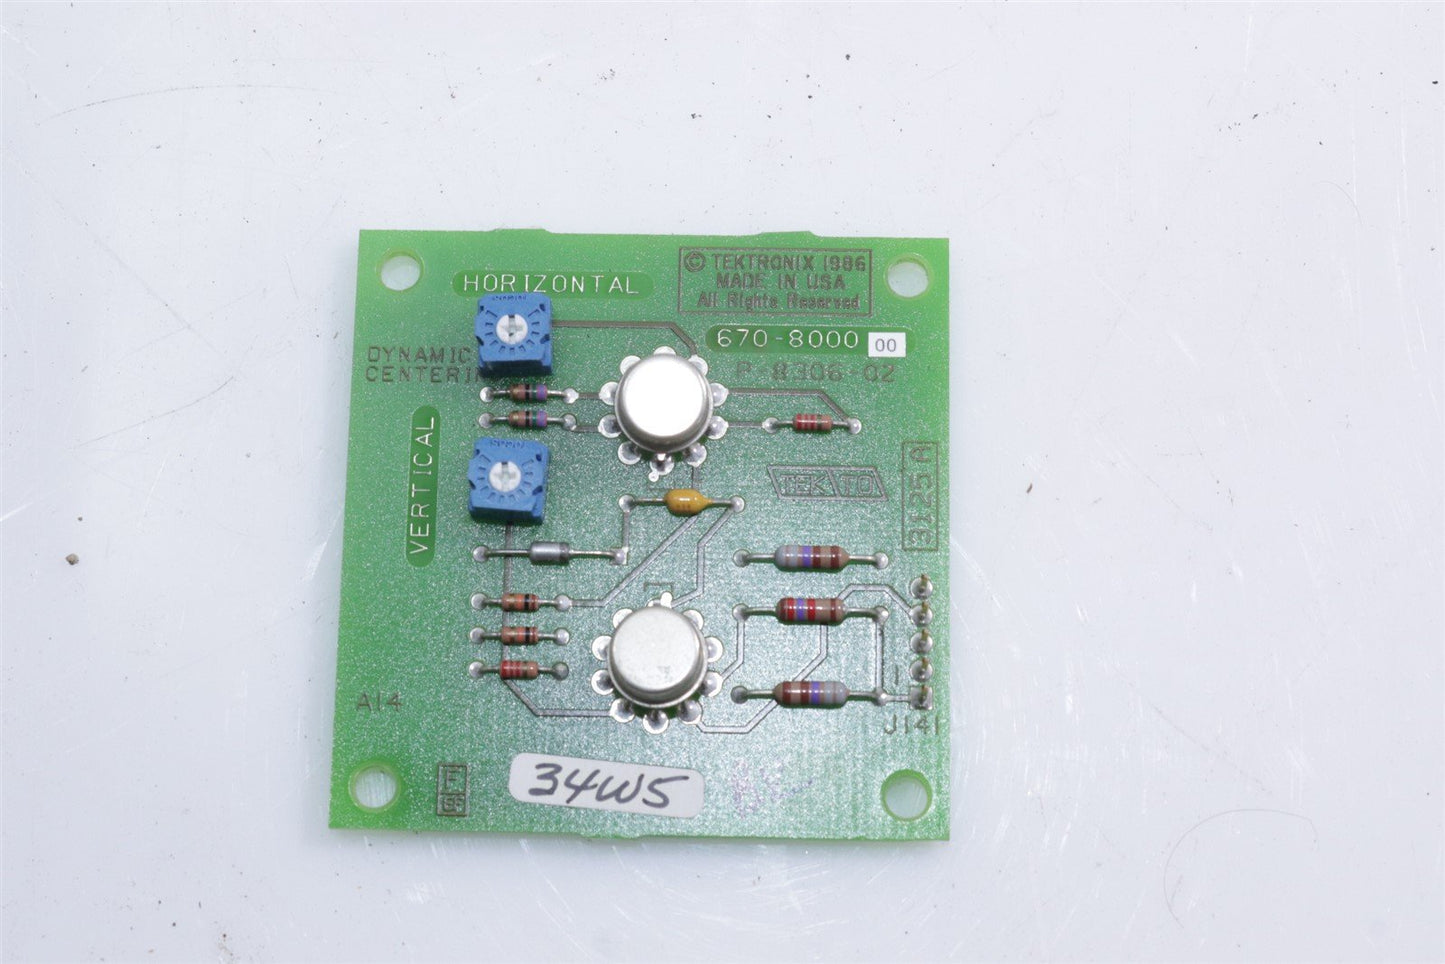 Tektronix 2445B 2465B Oscilloscope Dynamic Centering Circuit Board 670-8000-00